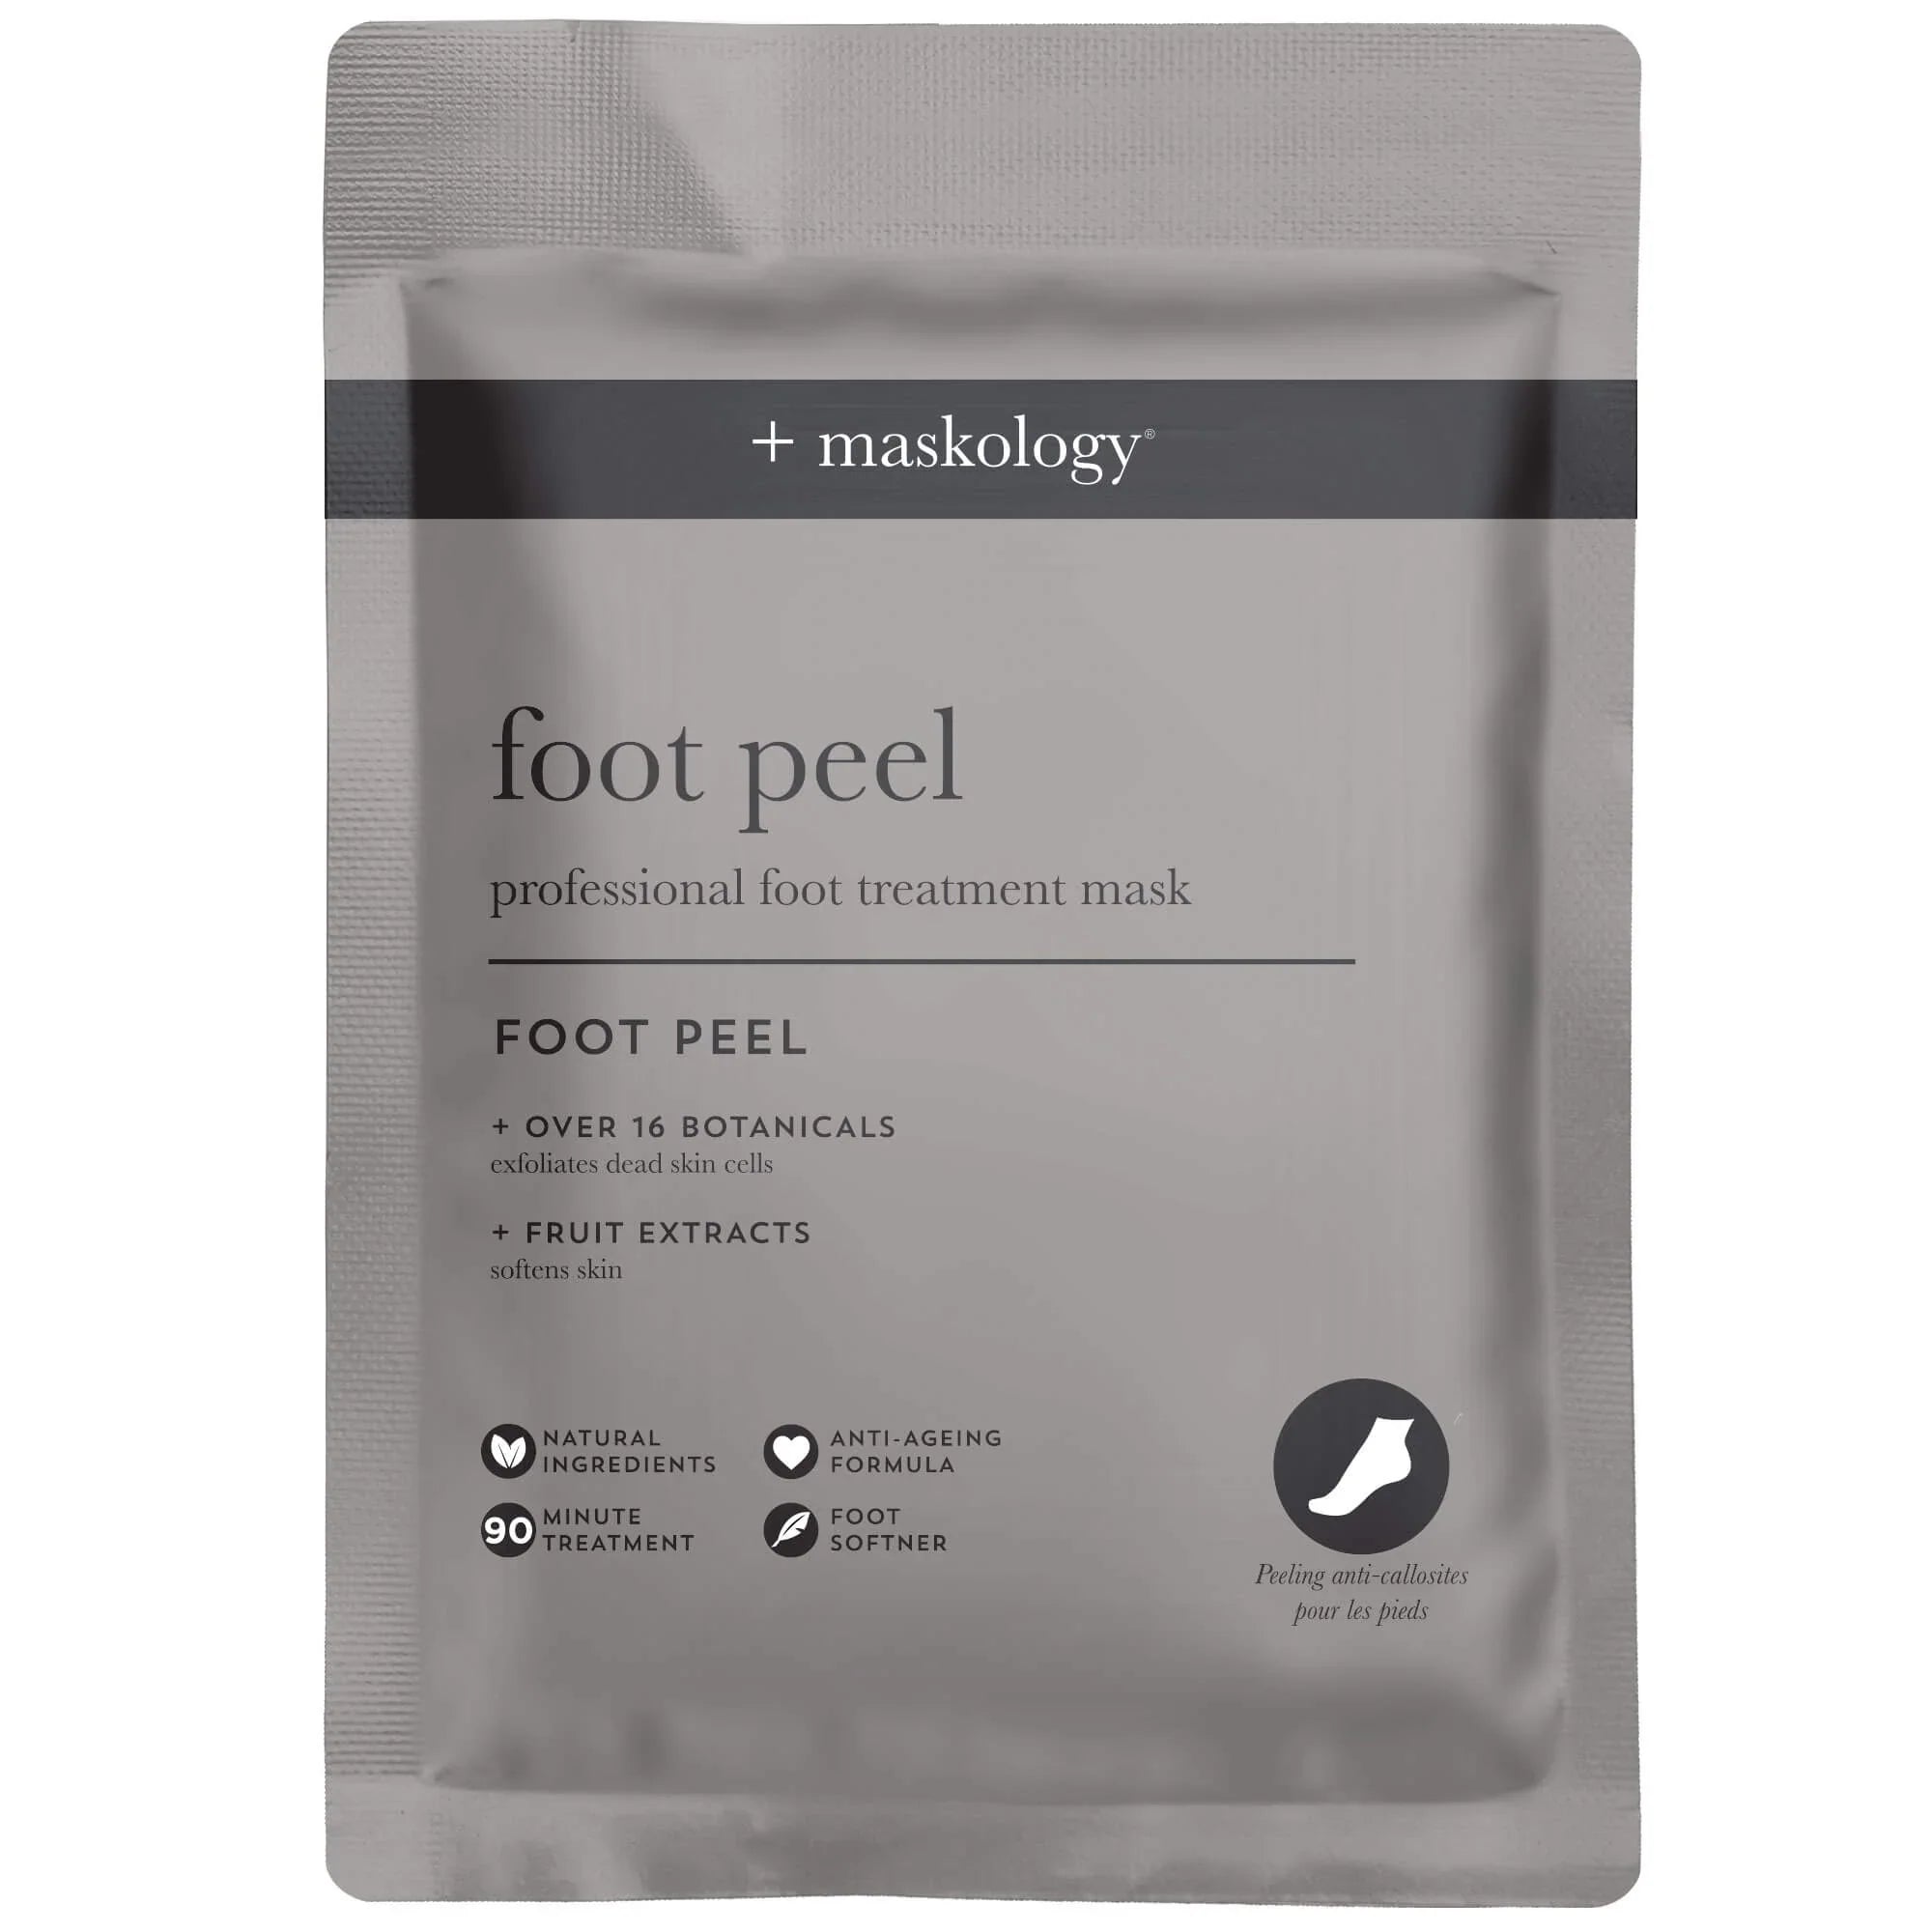 '+maskology FOOT PEEL Professional Foot Treatment